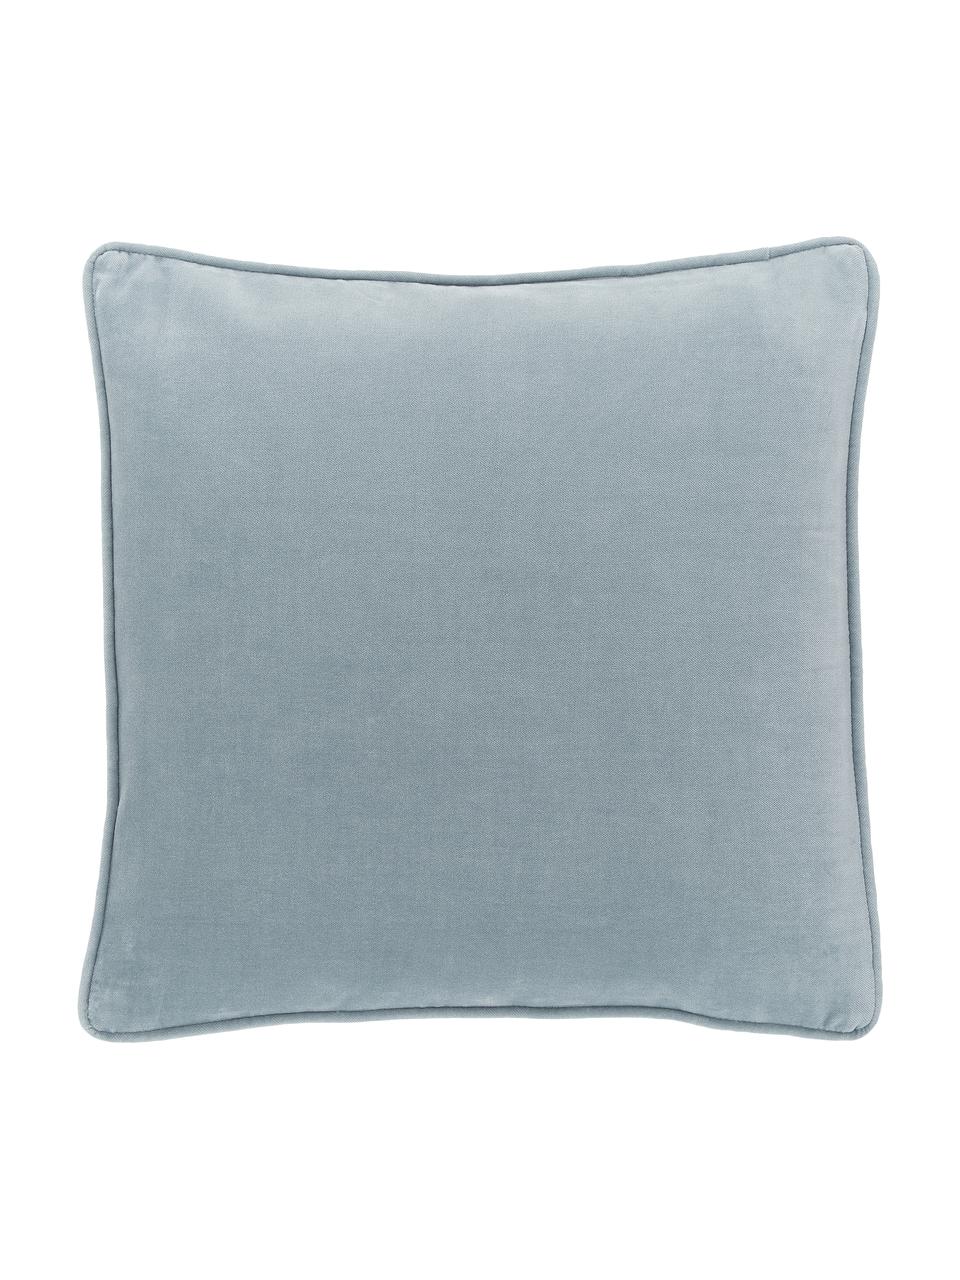 Einfarbige Samt-Kissenhülle Dana in Hellblau, 100% Baumwollsamt, Hellblau, B 50 x L 50 cm